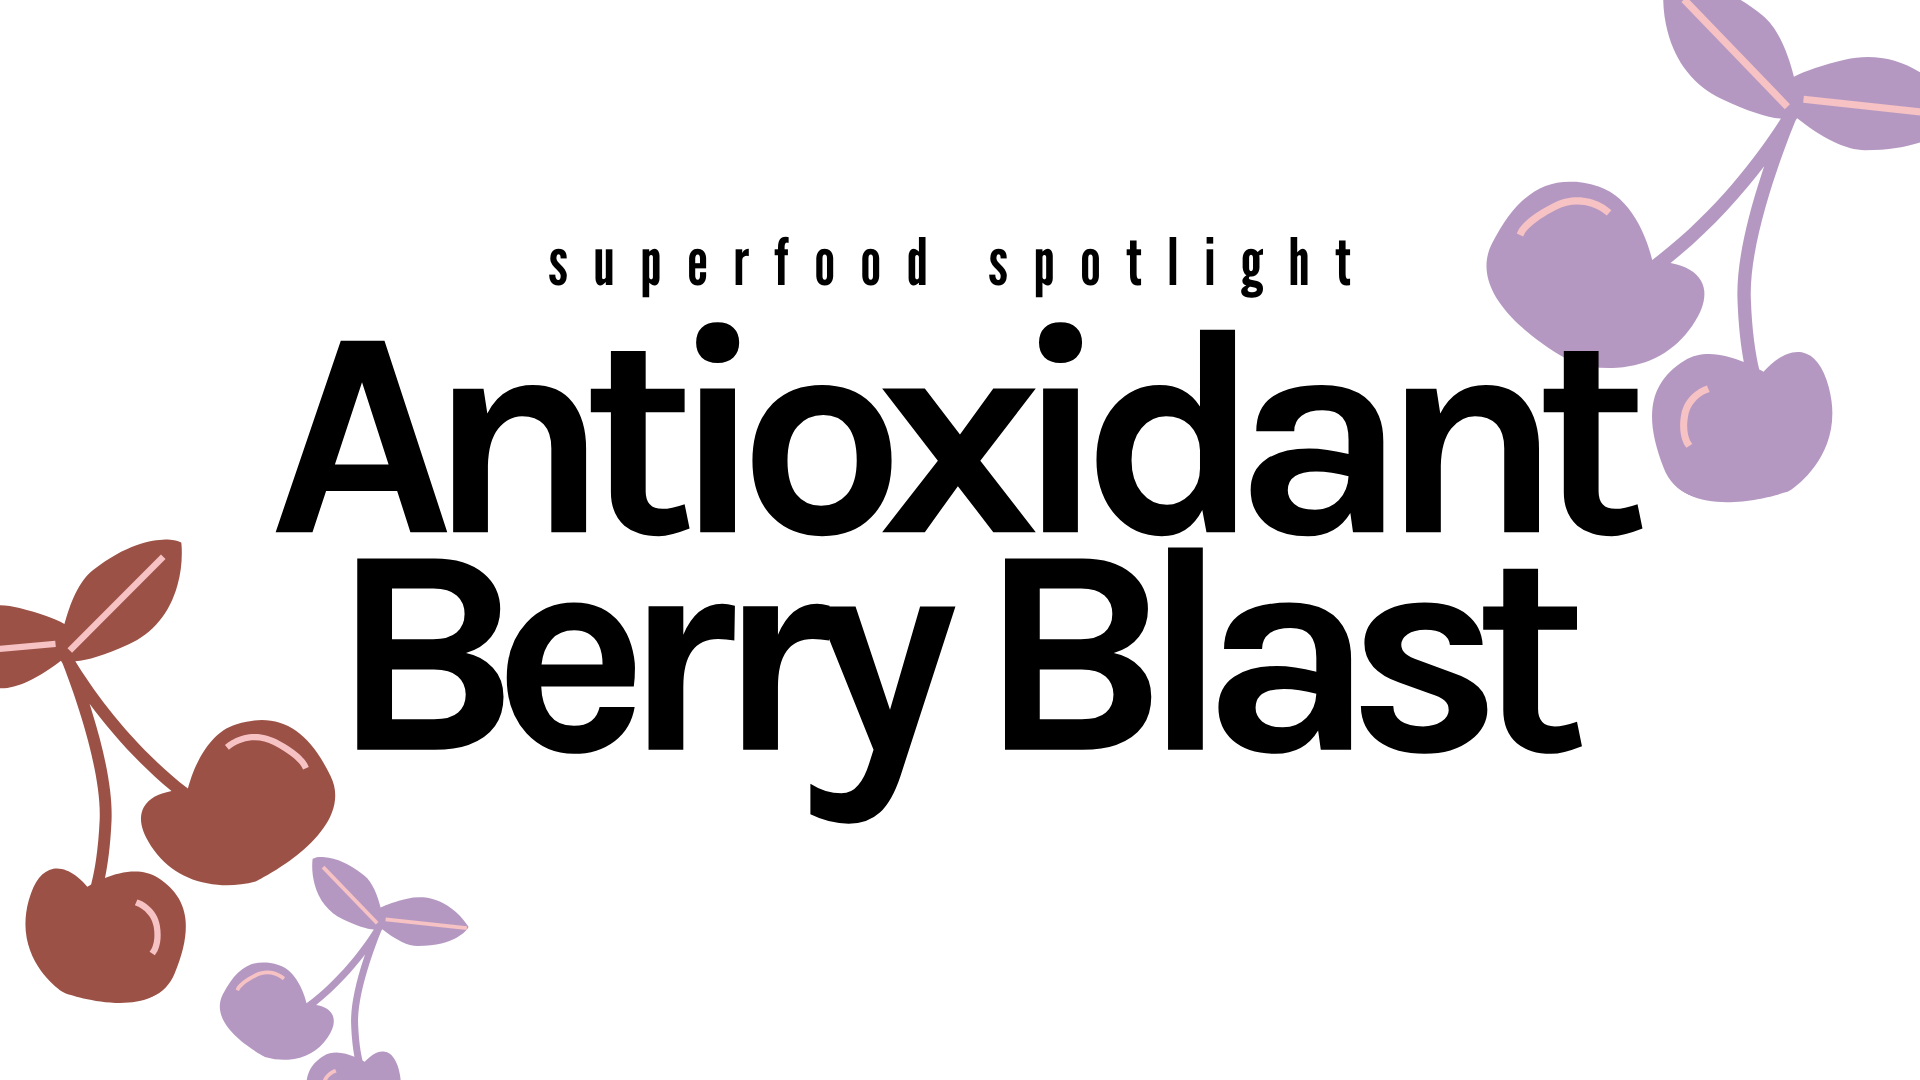 Superfood Spotlight: Antioxidant Berry Blast